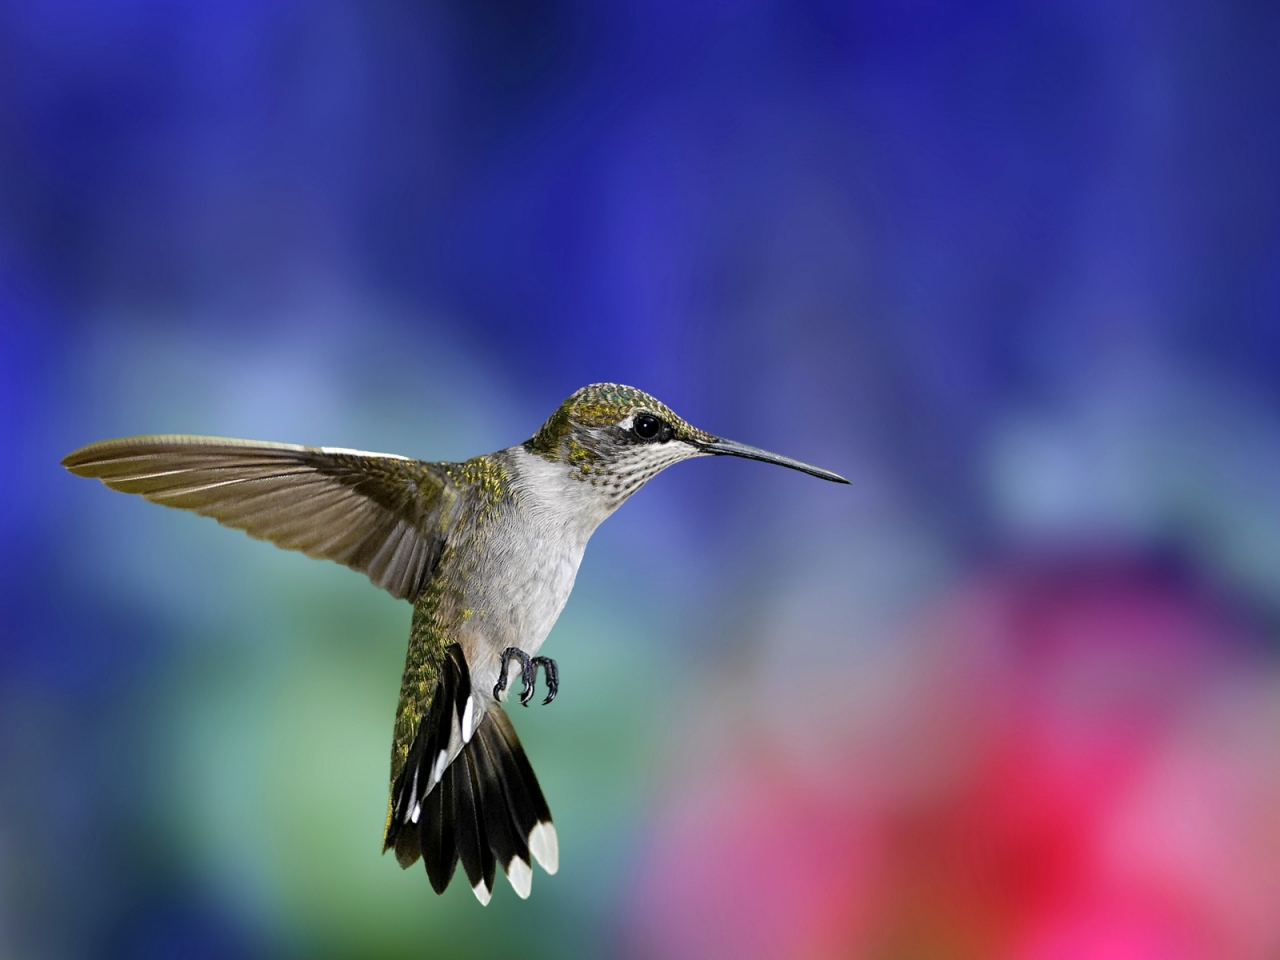 Colibri Bird for 1280 x 960 resolution